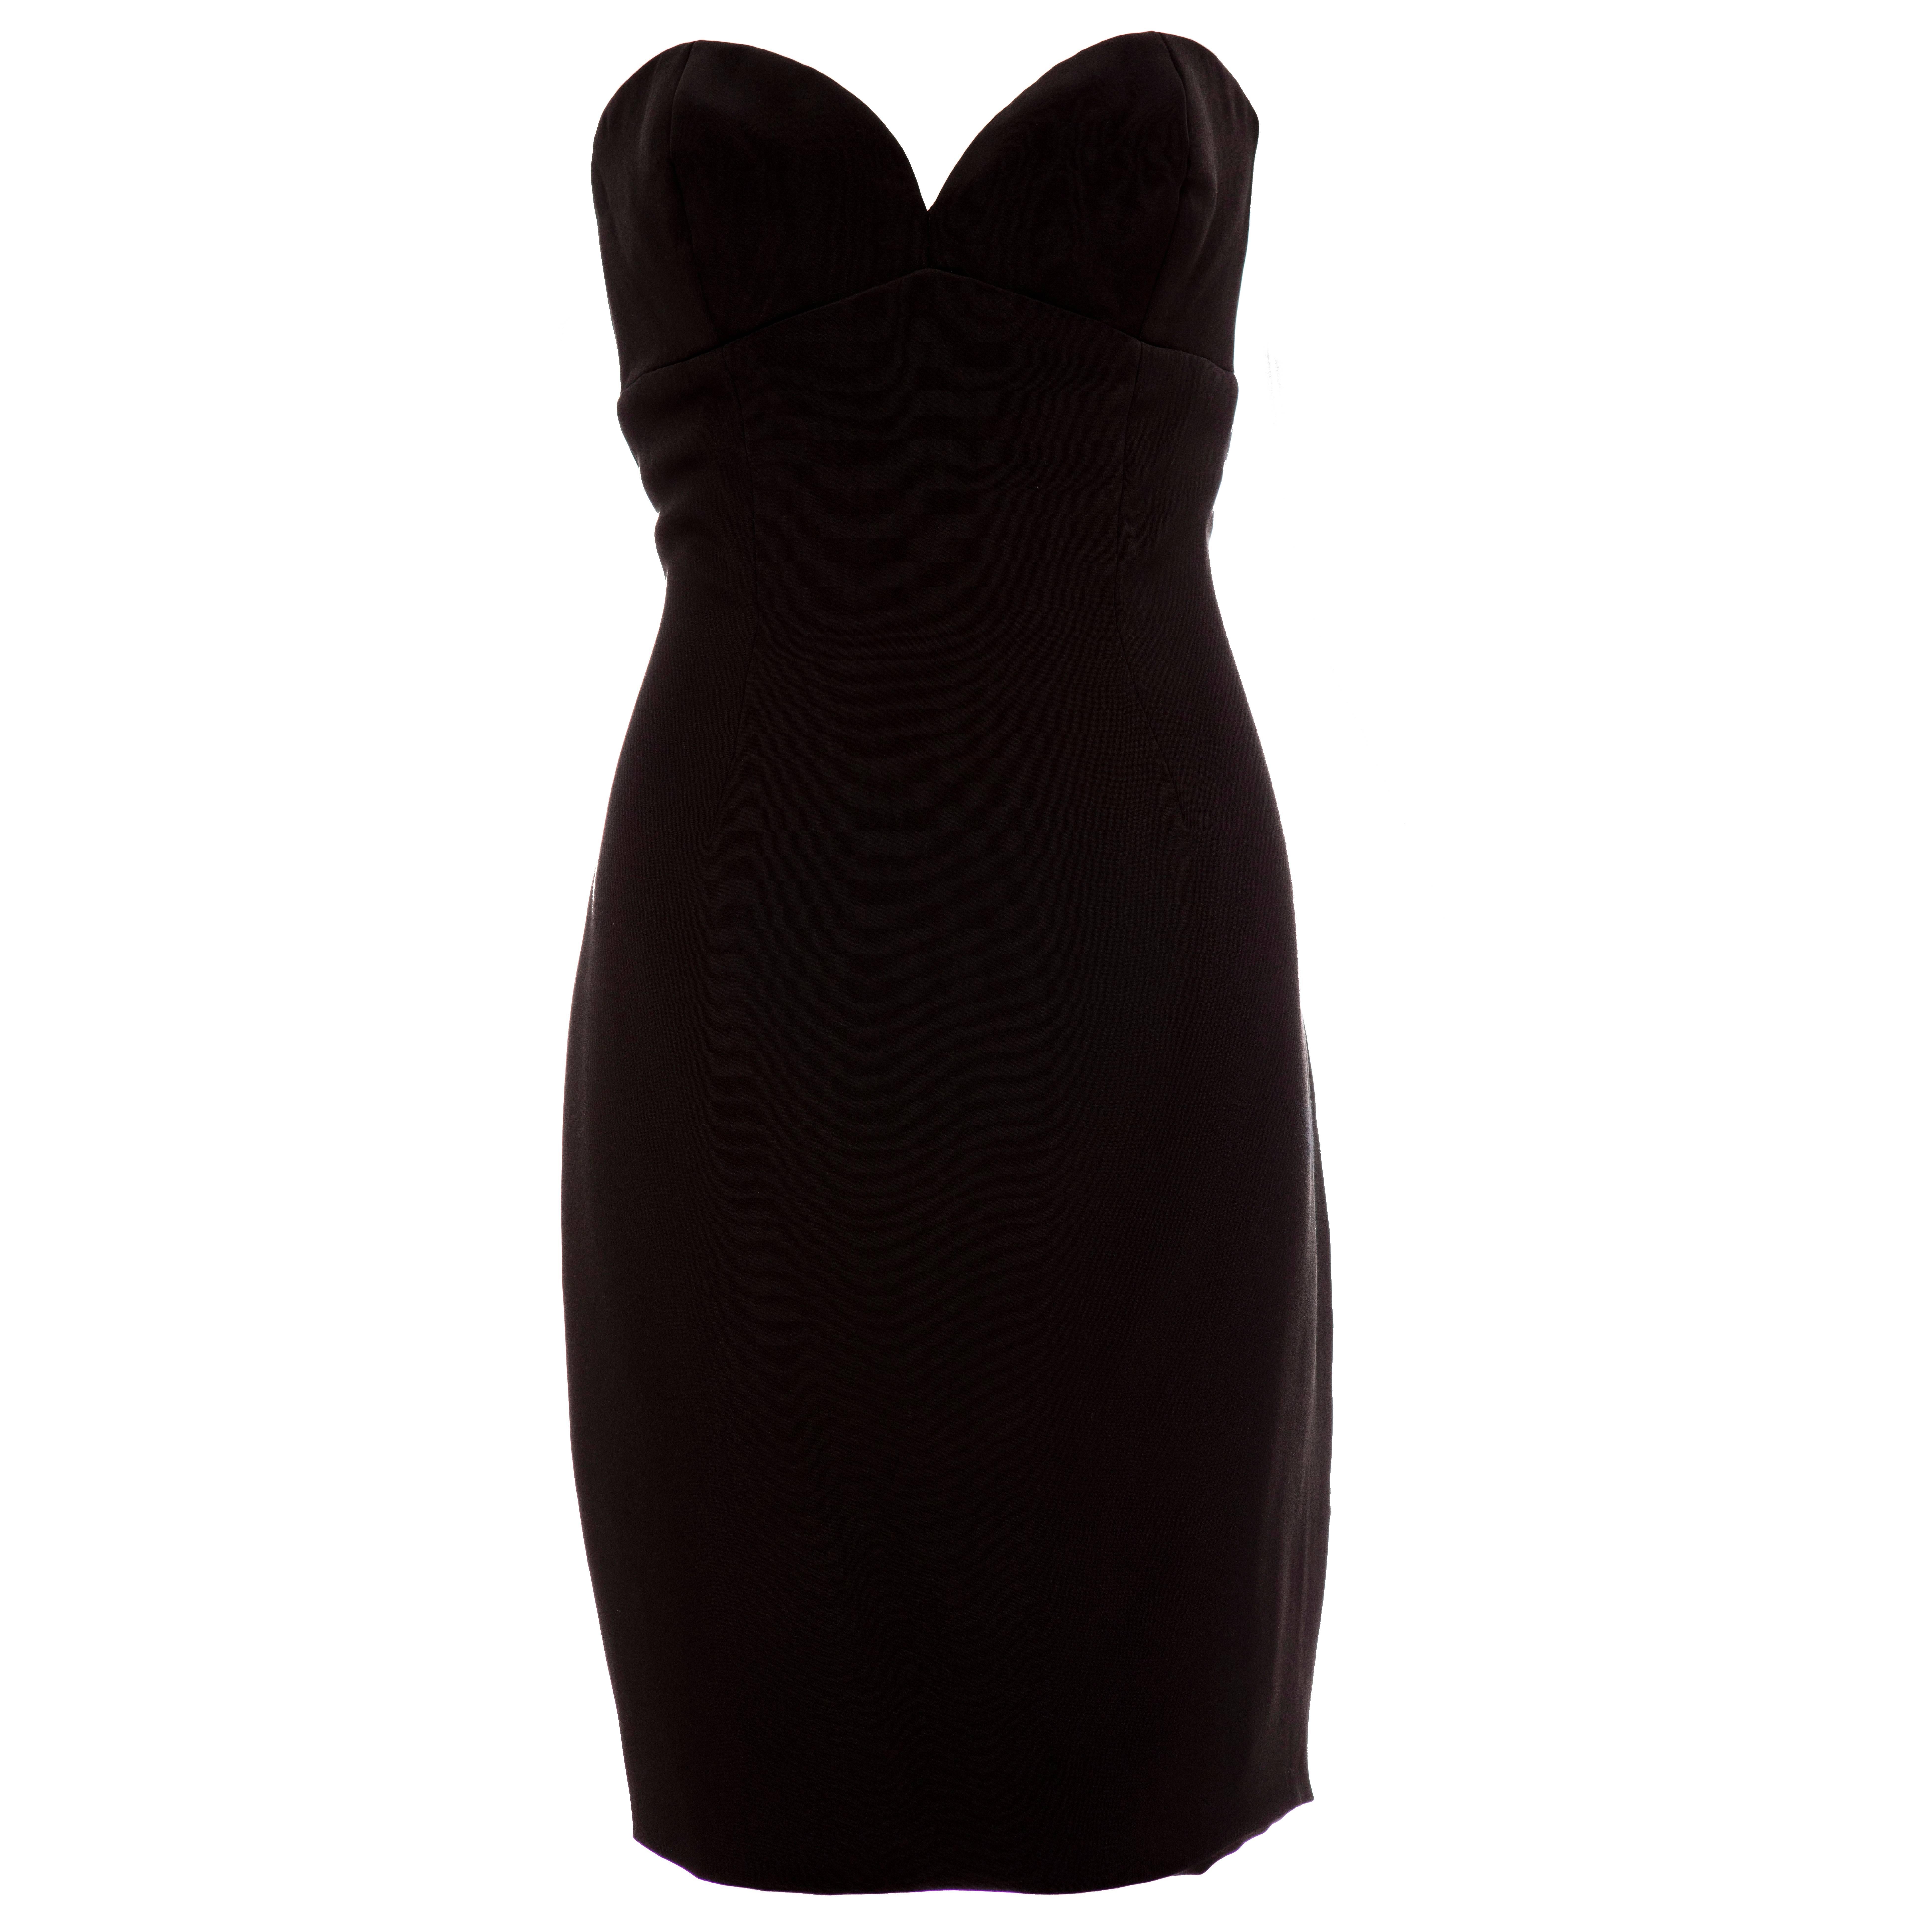 Vicky Tiel Couture Black Silk Strapless Dress, Circa 1980's For Sale